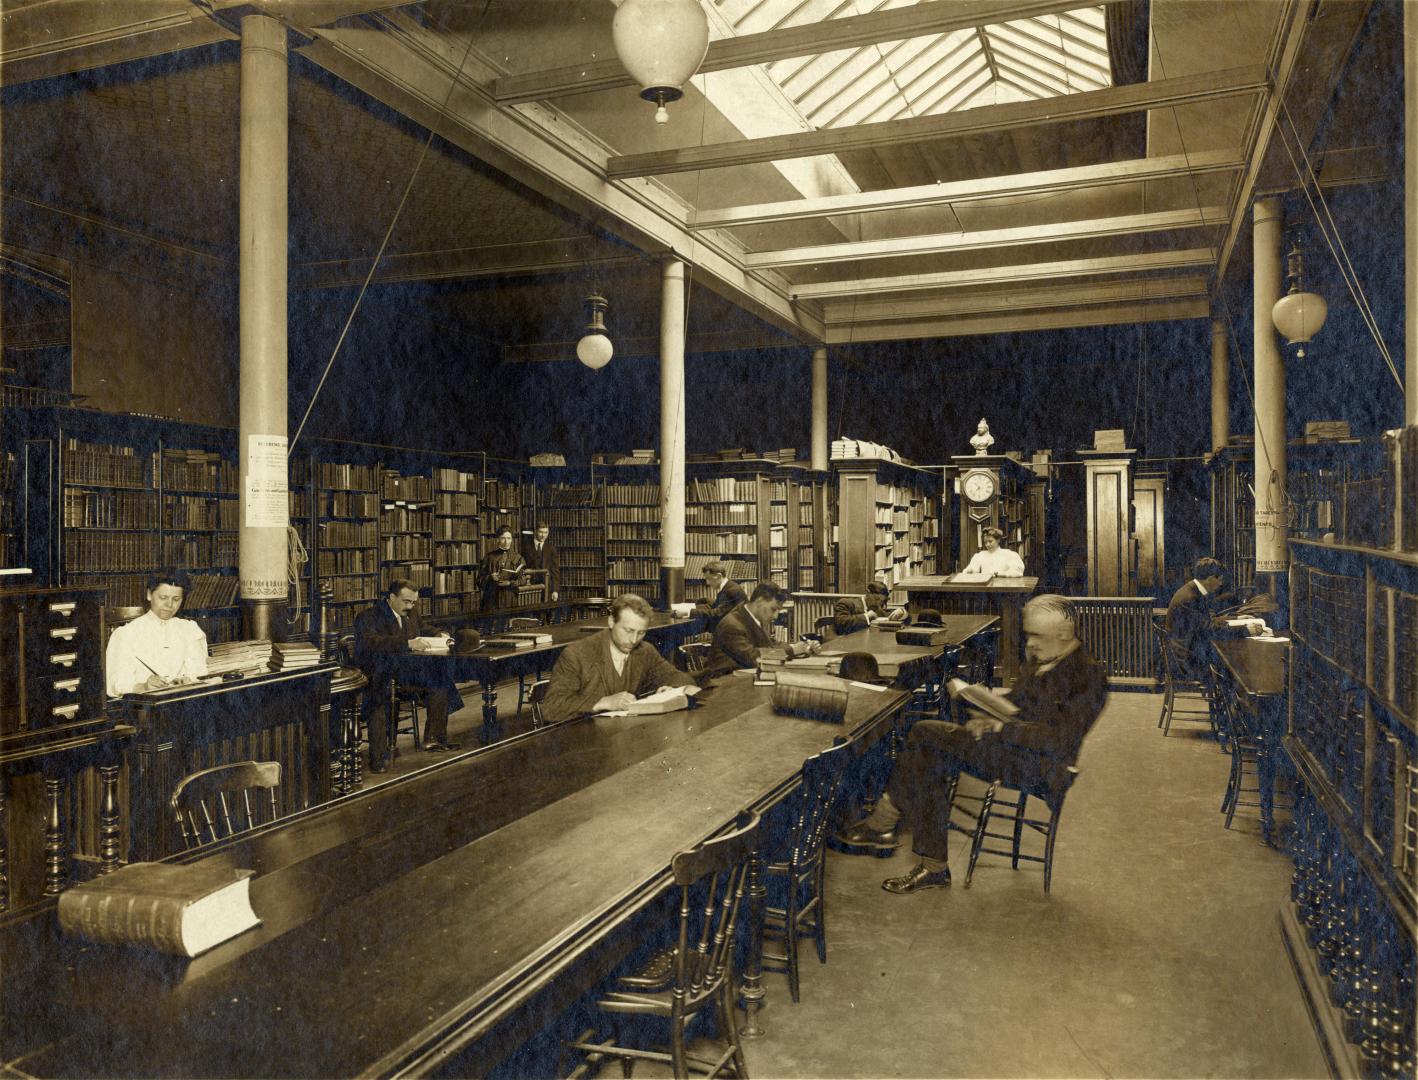  Toronto Public Library - Mechanics' Institute building